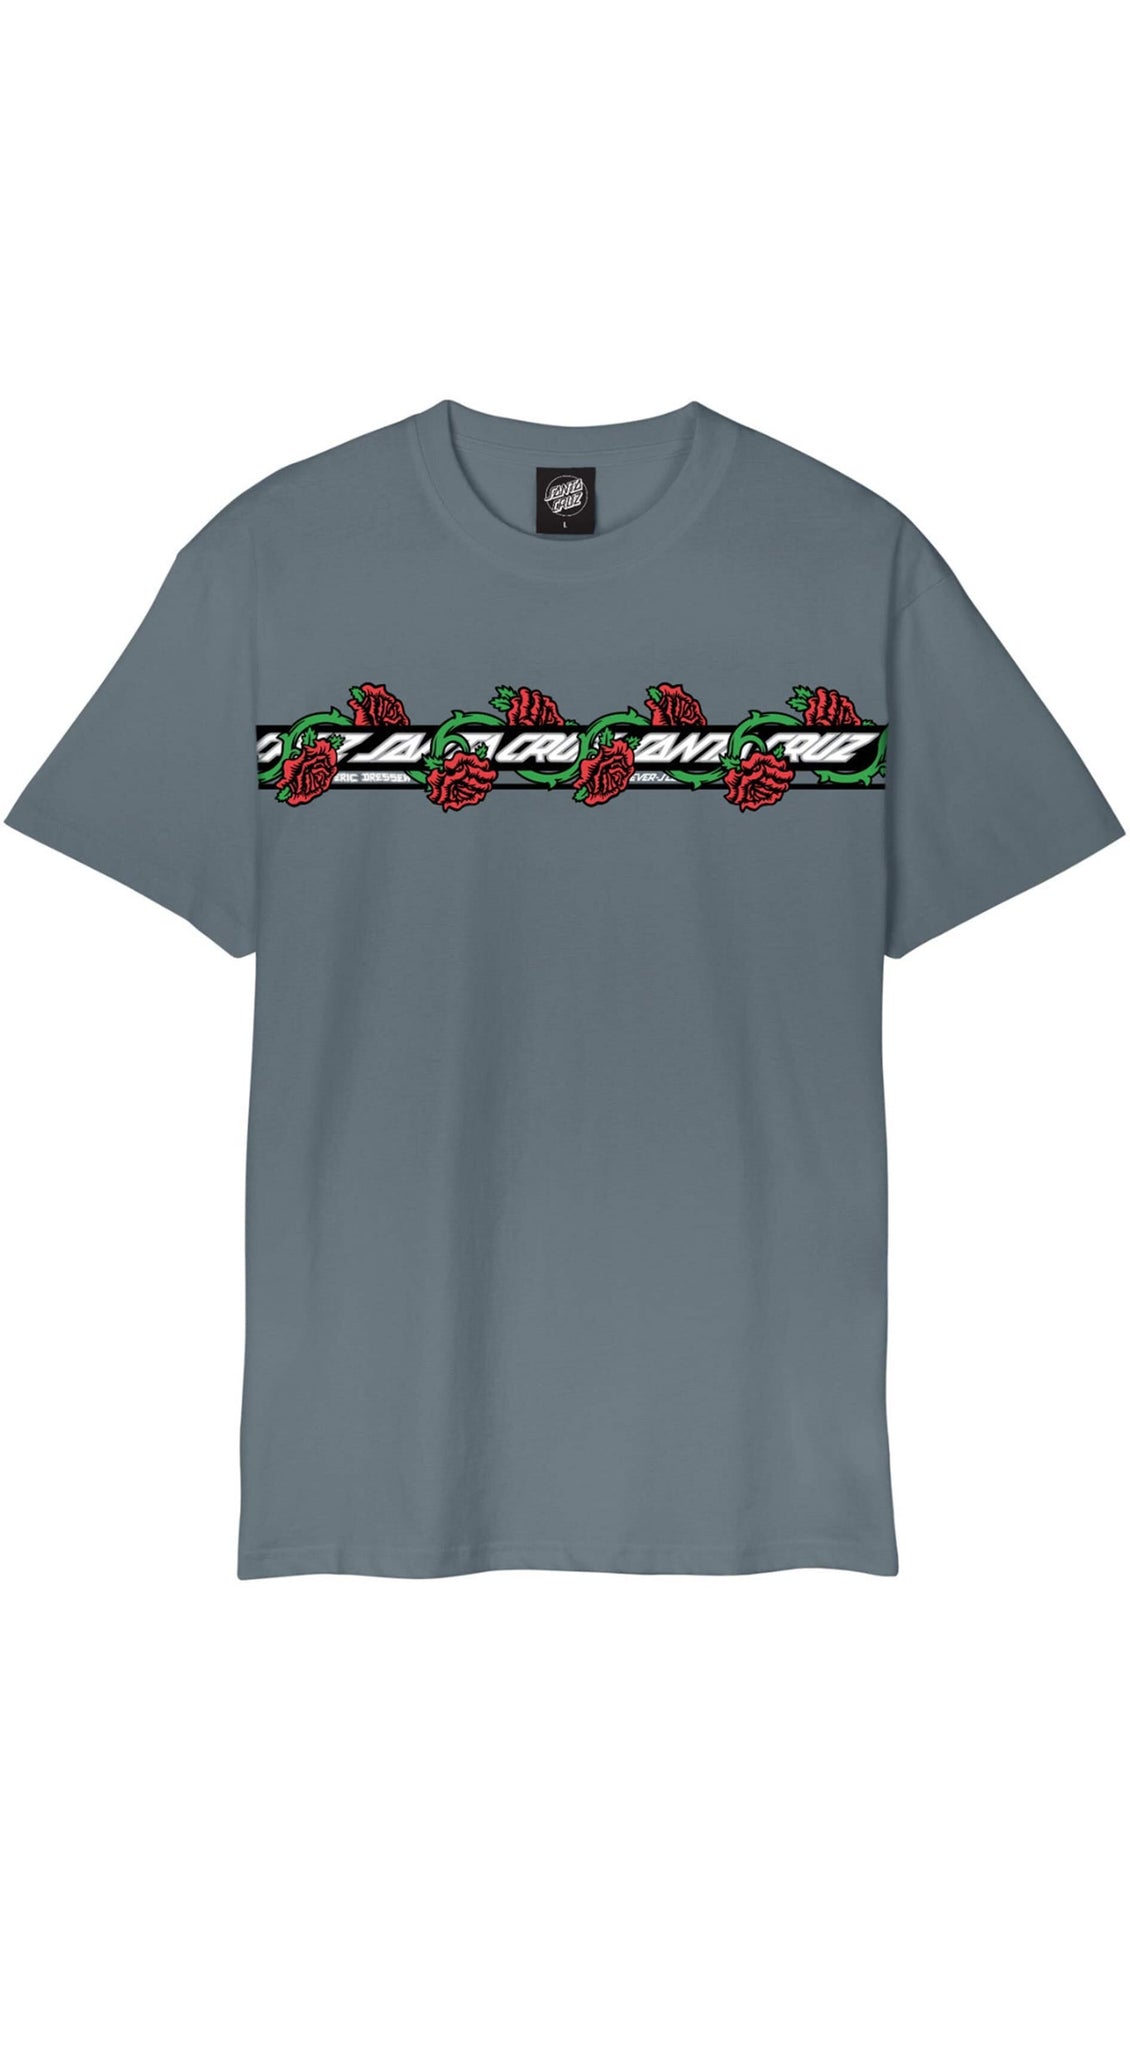 Santa Cruz Dressen Roses Ever-Slick Iron TShirt - Camiseta Ropa Santa Cruz Skateboards 